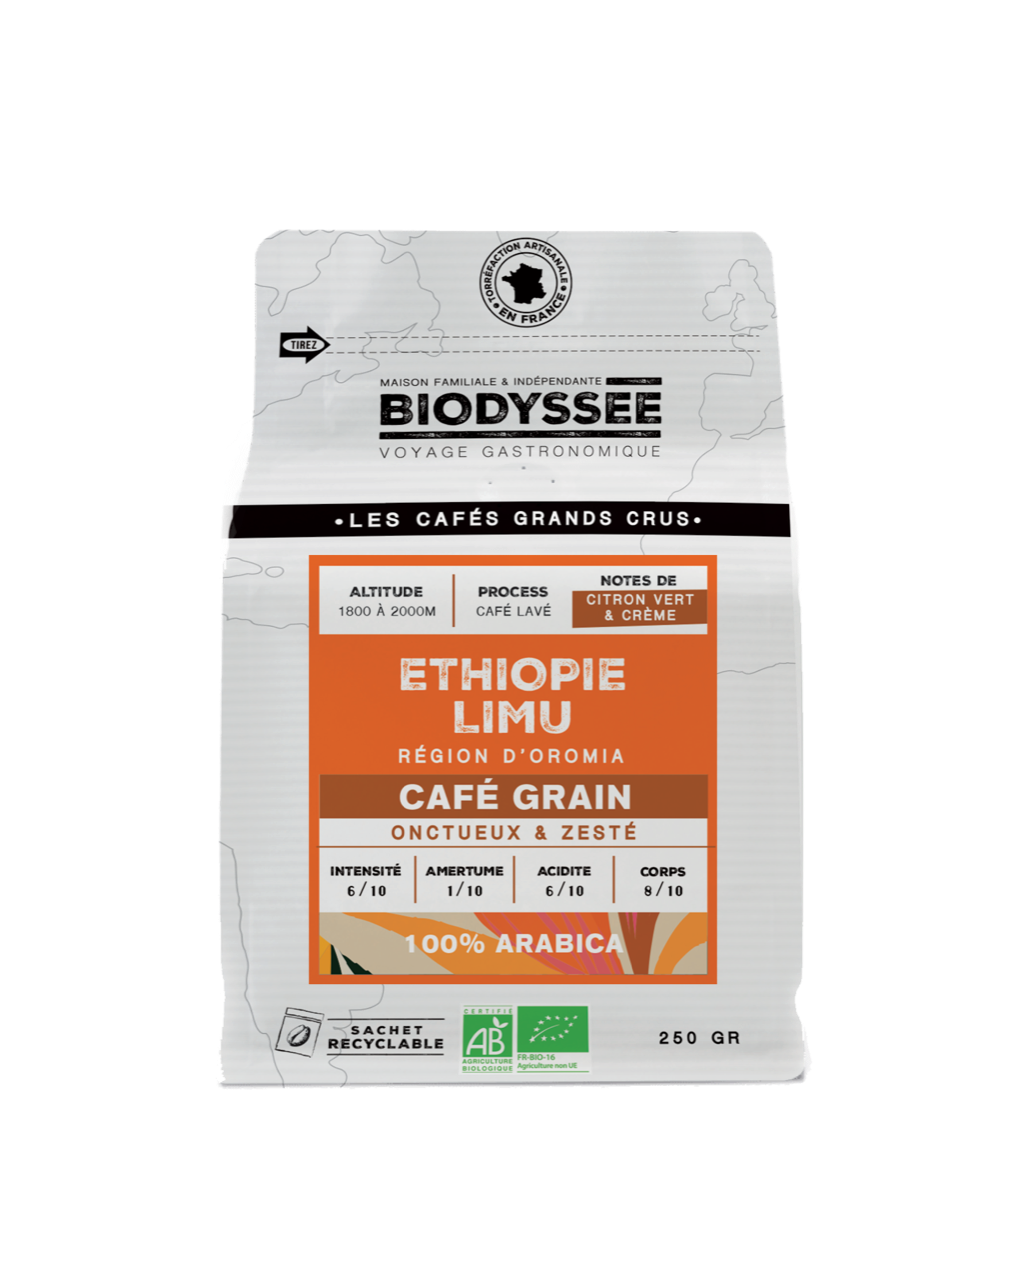 Biodyssée -- Café grain grand cru ethiopie limu (origine Ethiopie) - 250 g